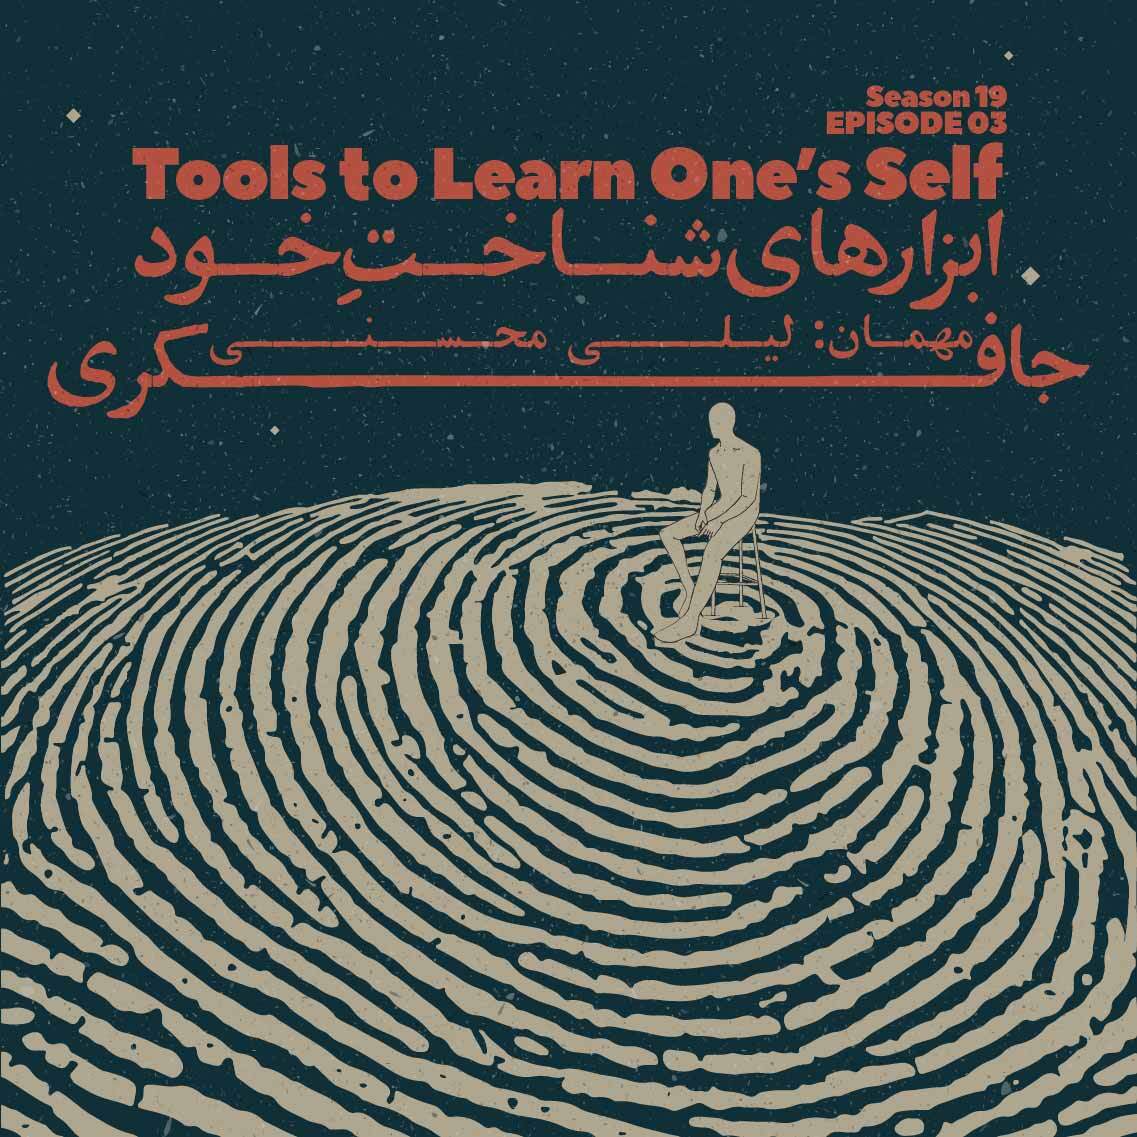 Episode 03 - Tools to Learn One’s Self (ابزارهای شناخت خود)